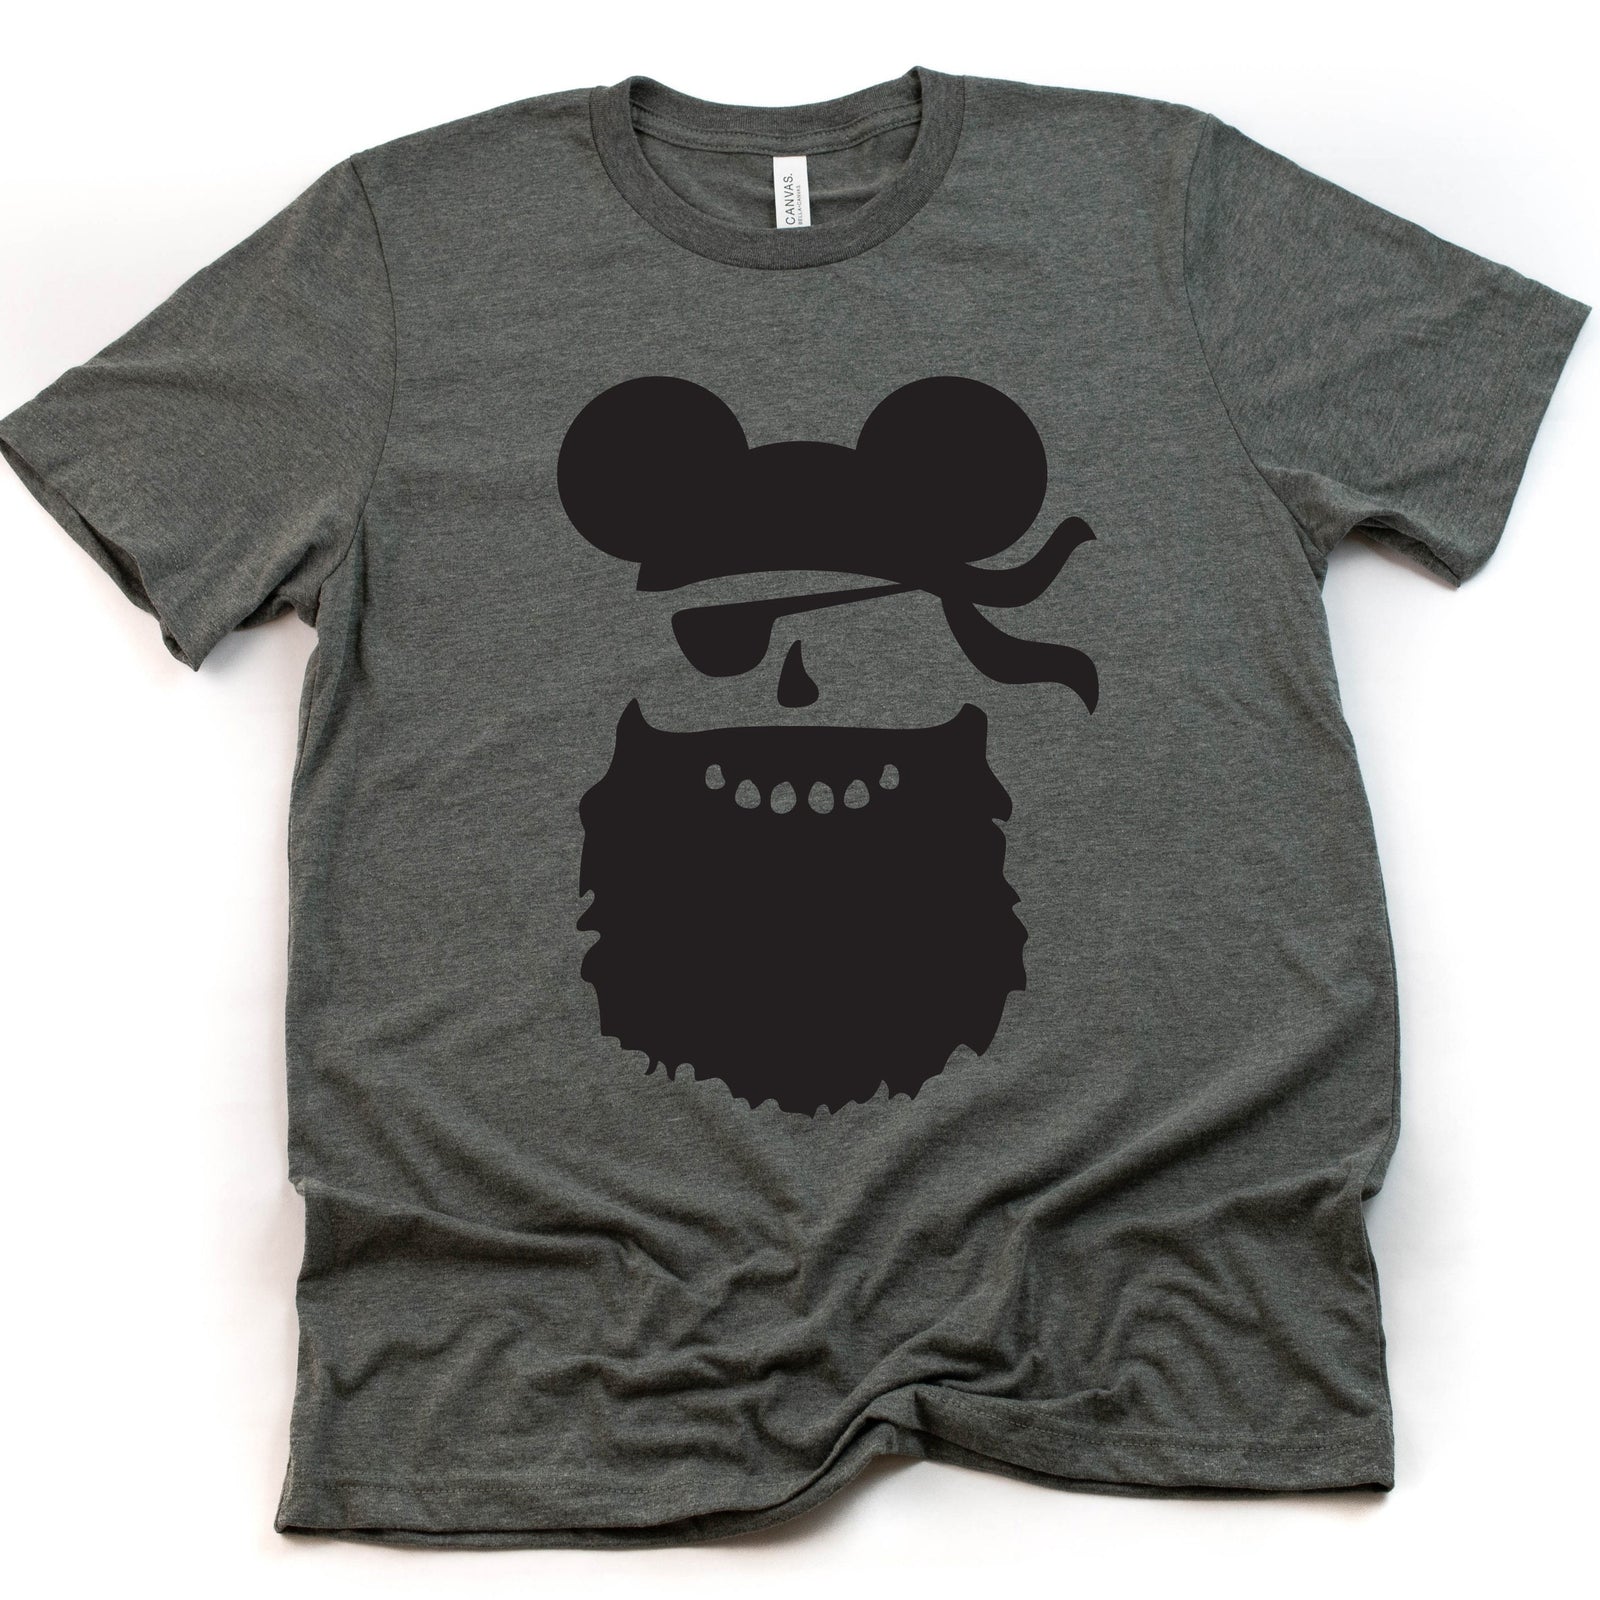 Bearded Mickey Pirate Adult Unisex T shirt - Disney Trip Cruise Matching Shirts - Mickey Mouse T Shirt